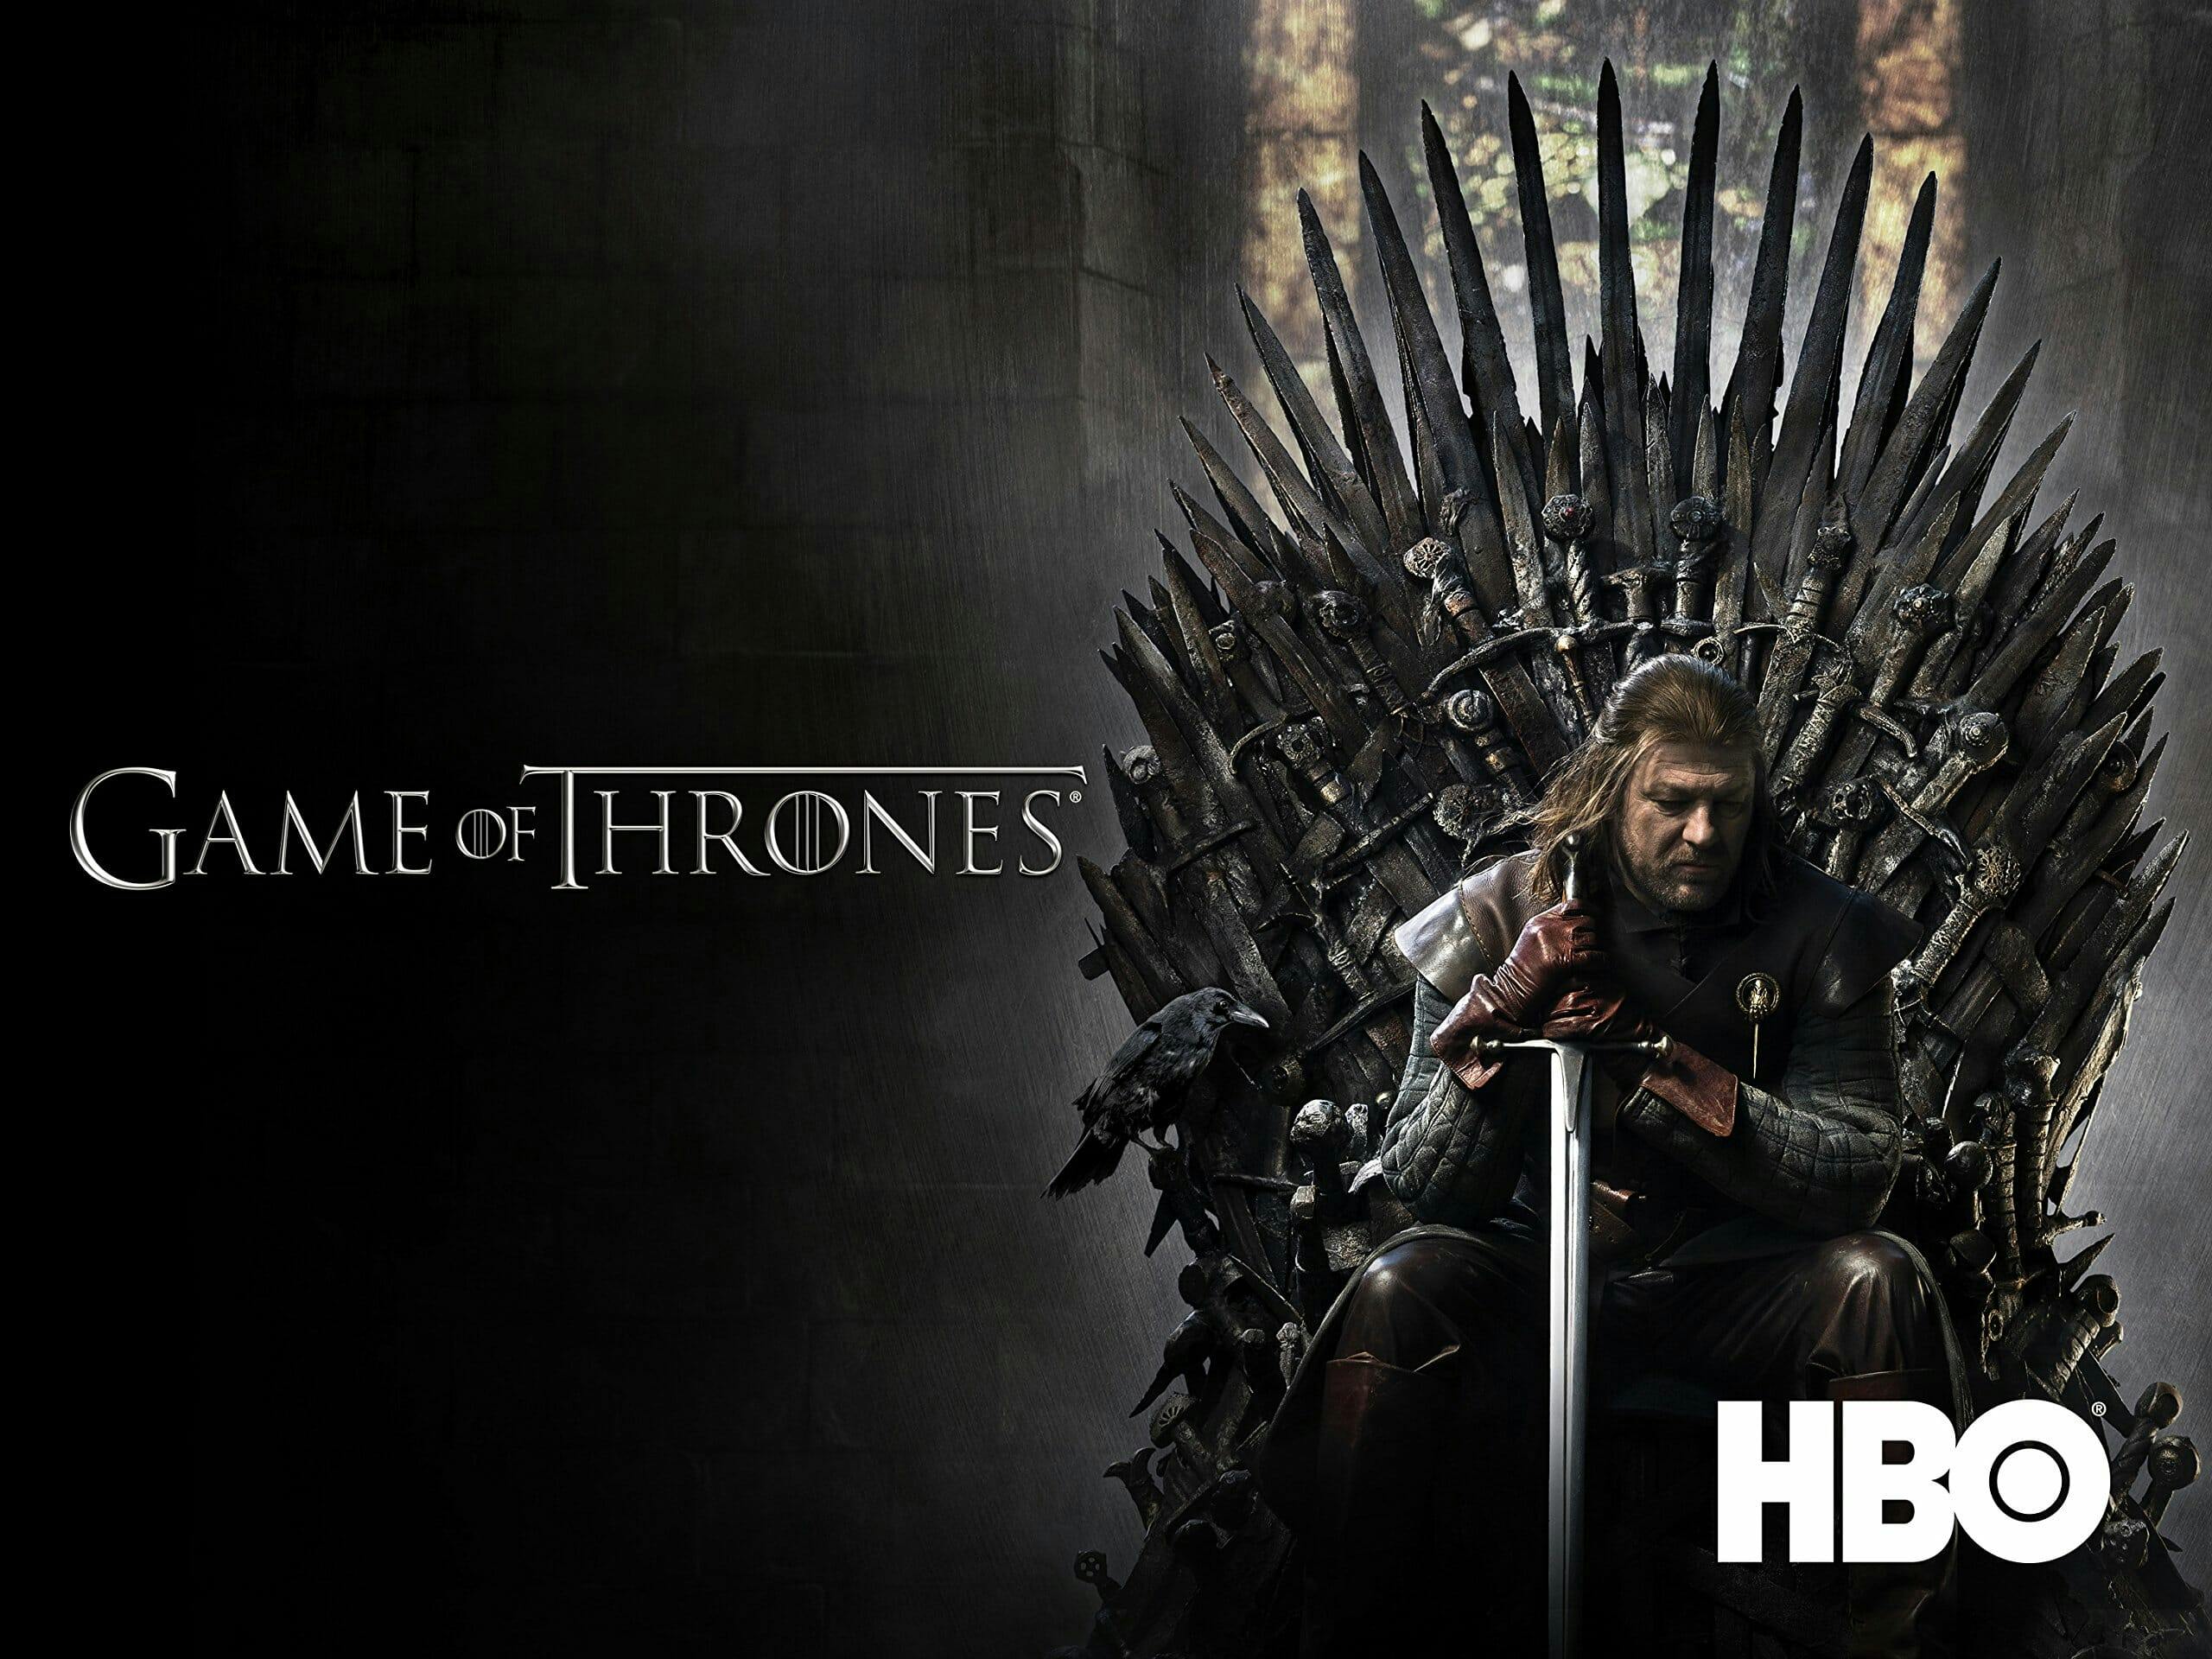 watch game of thrones season 8 episode 5 free on Amazon